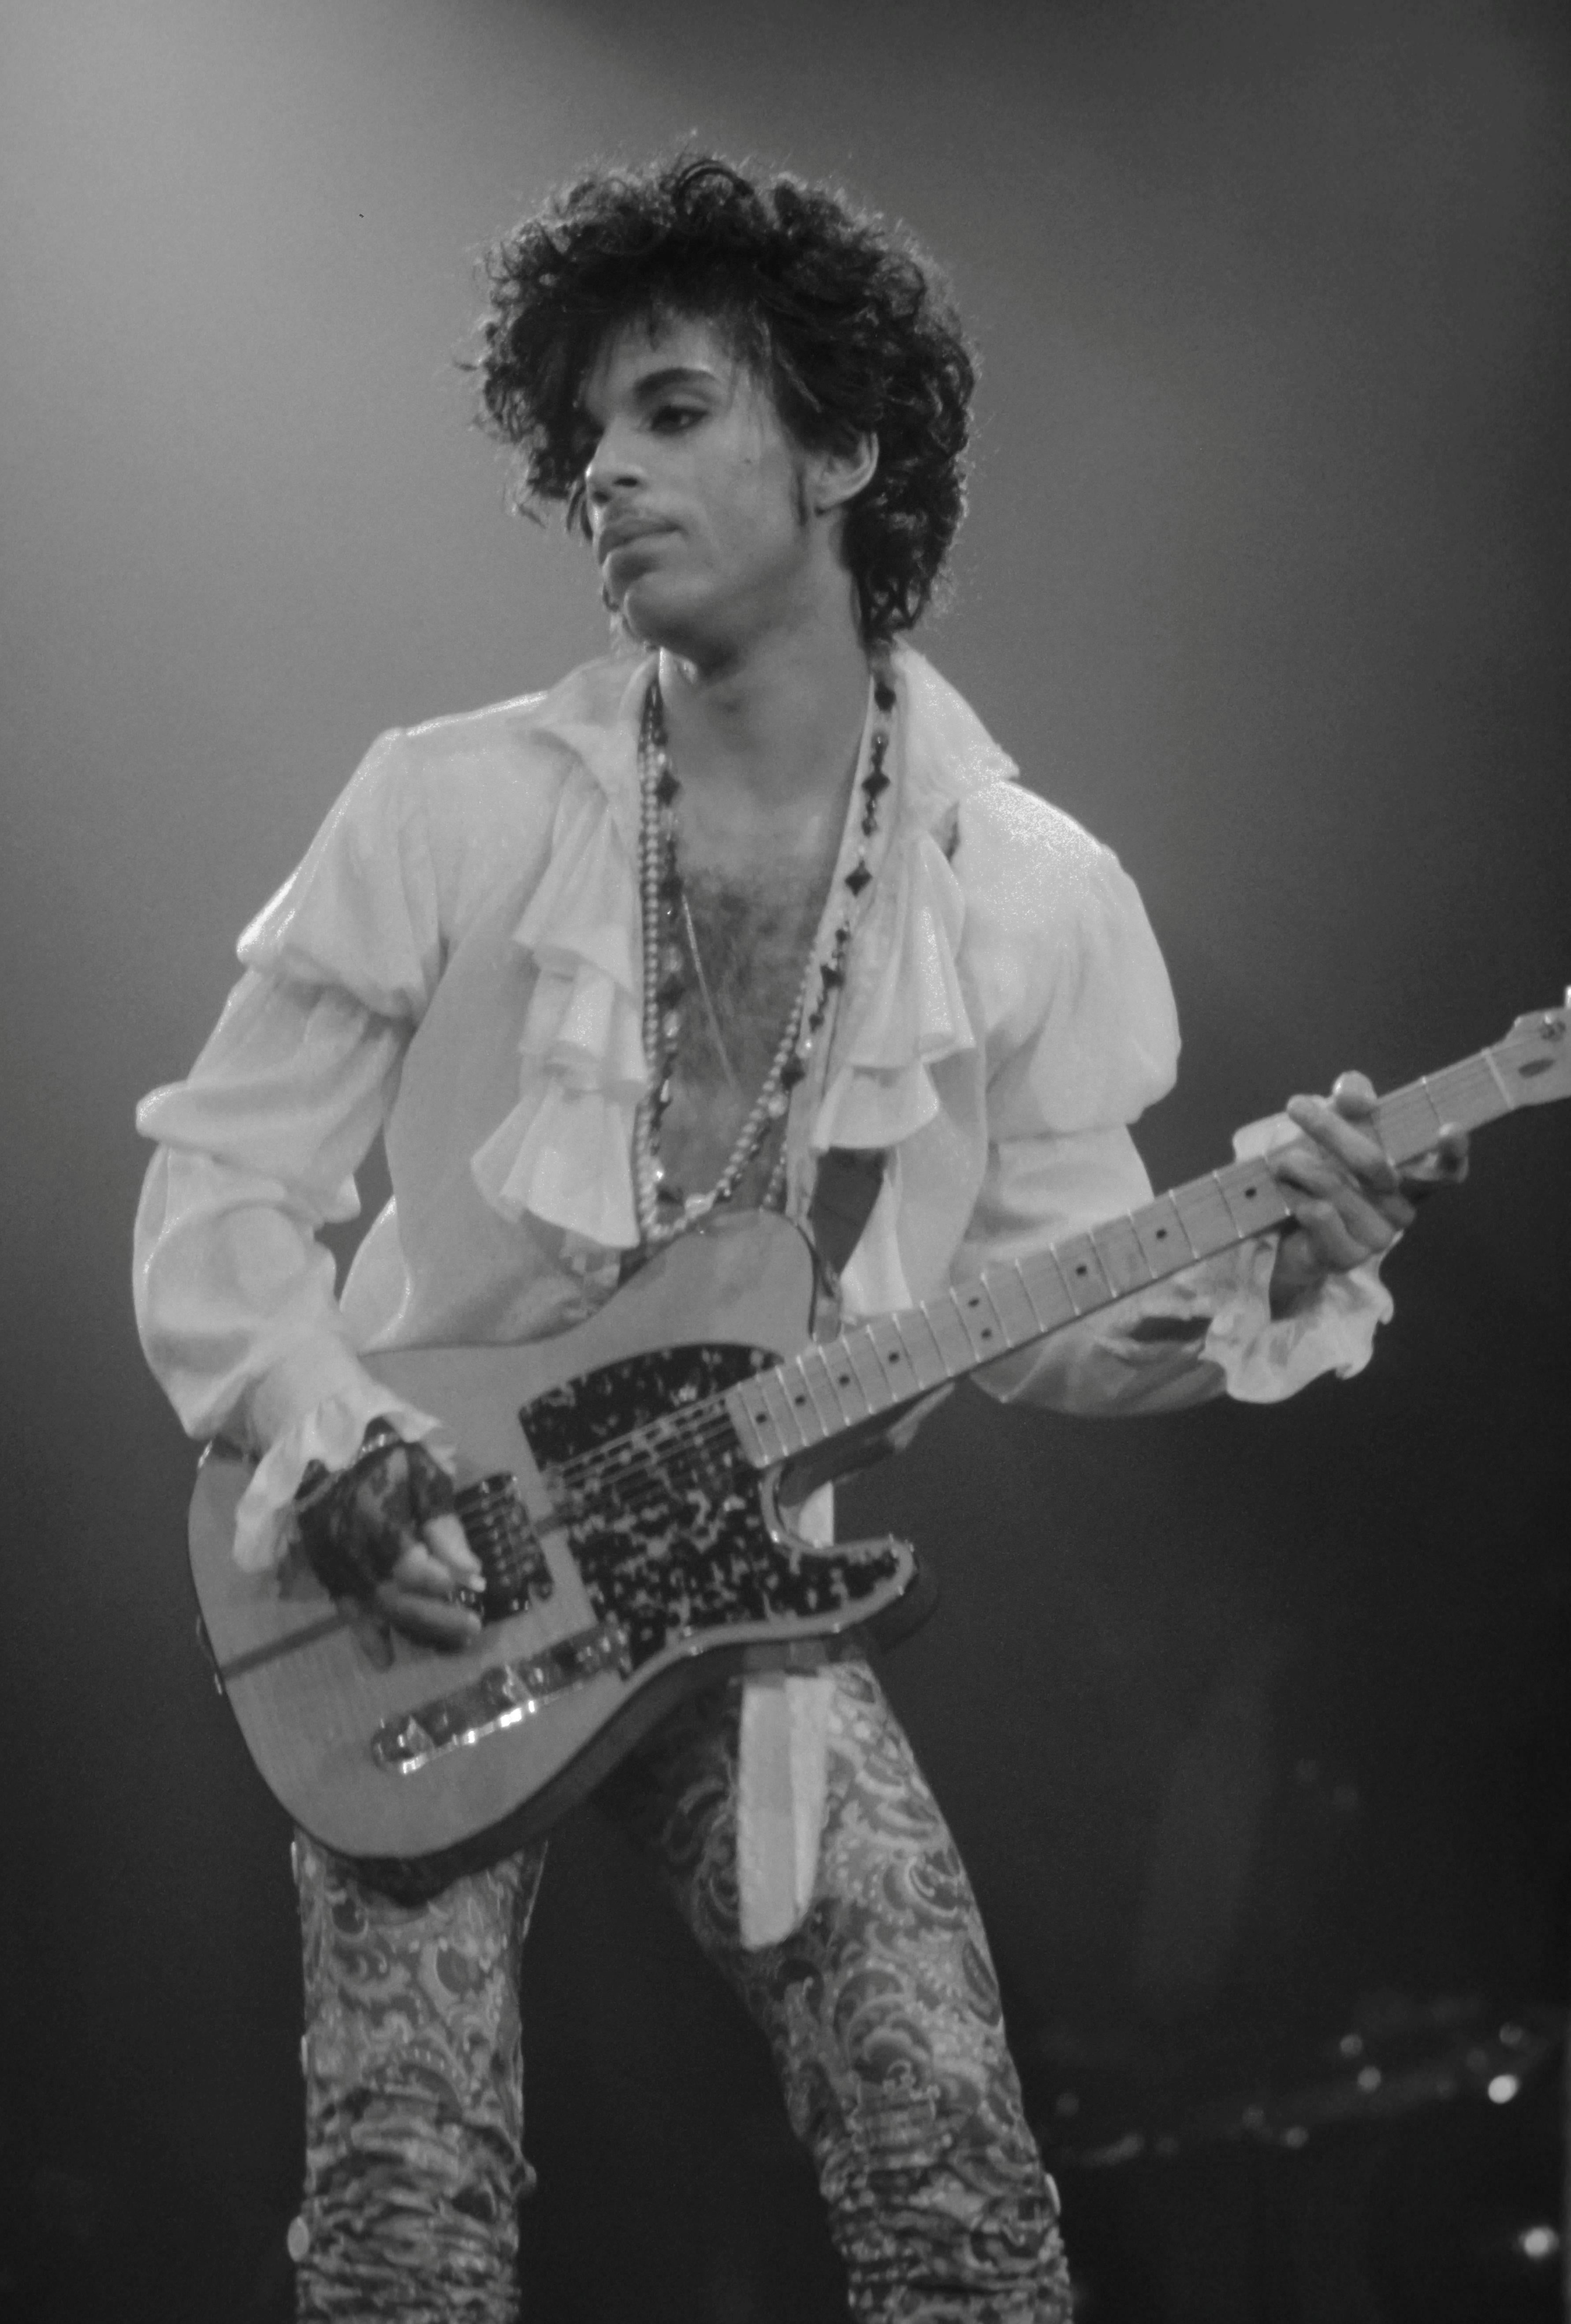 David Plastik Portrait Photograph - Prince Playing Guitar on Stage Fine Art Print